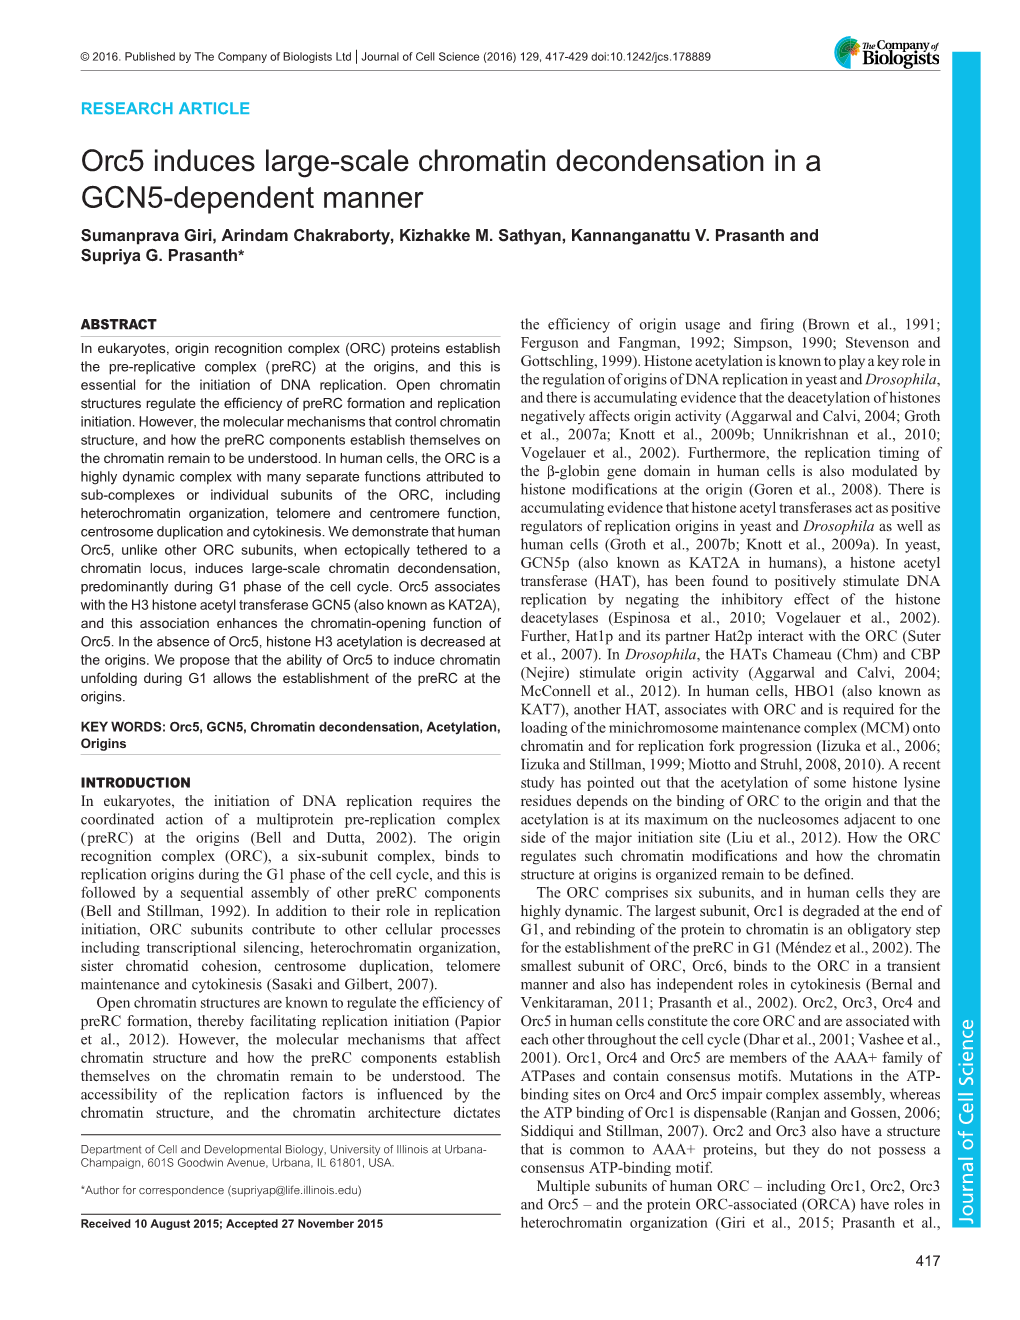 Orc5 Induces Large-Scale Chromatin Decondensation in a GCN5-Dependent Manner Sumanprava Giri, Arindam Chakraborty, Kizhakke M